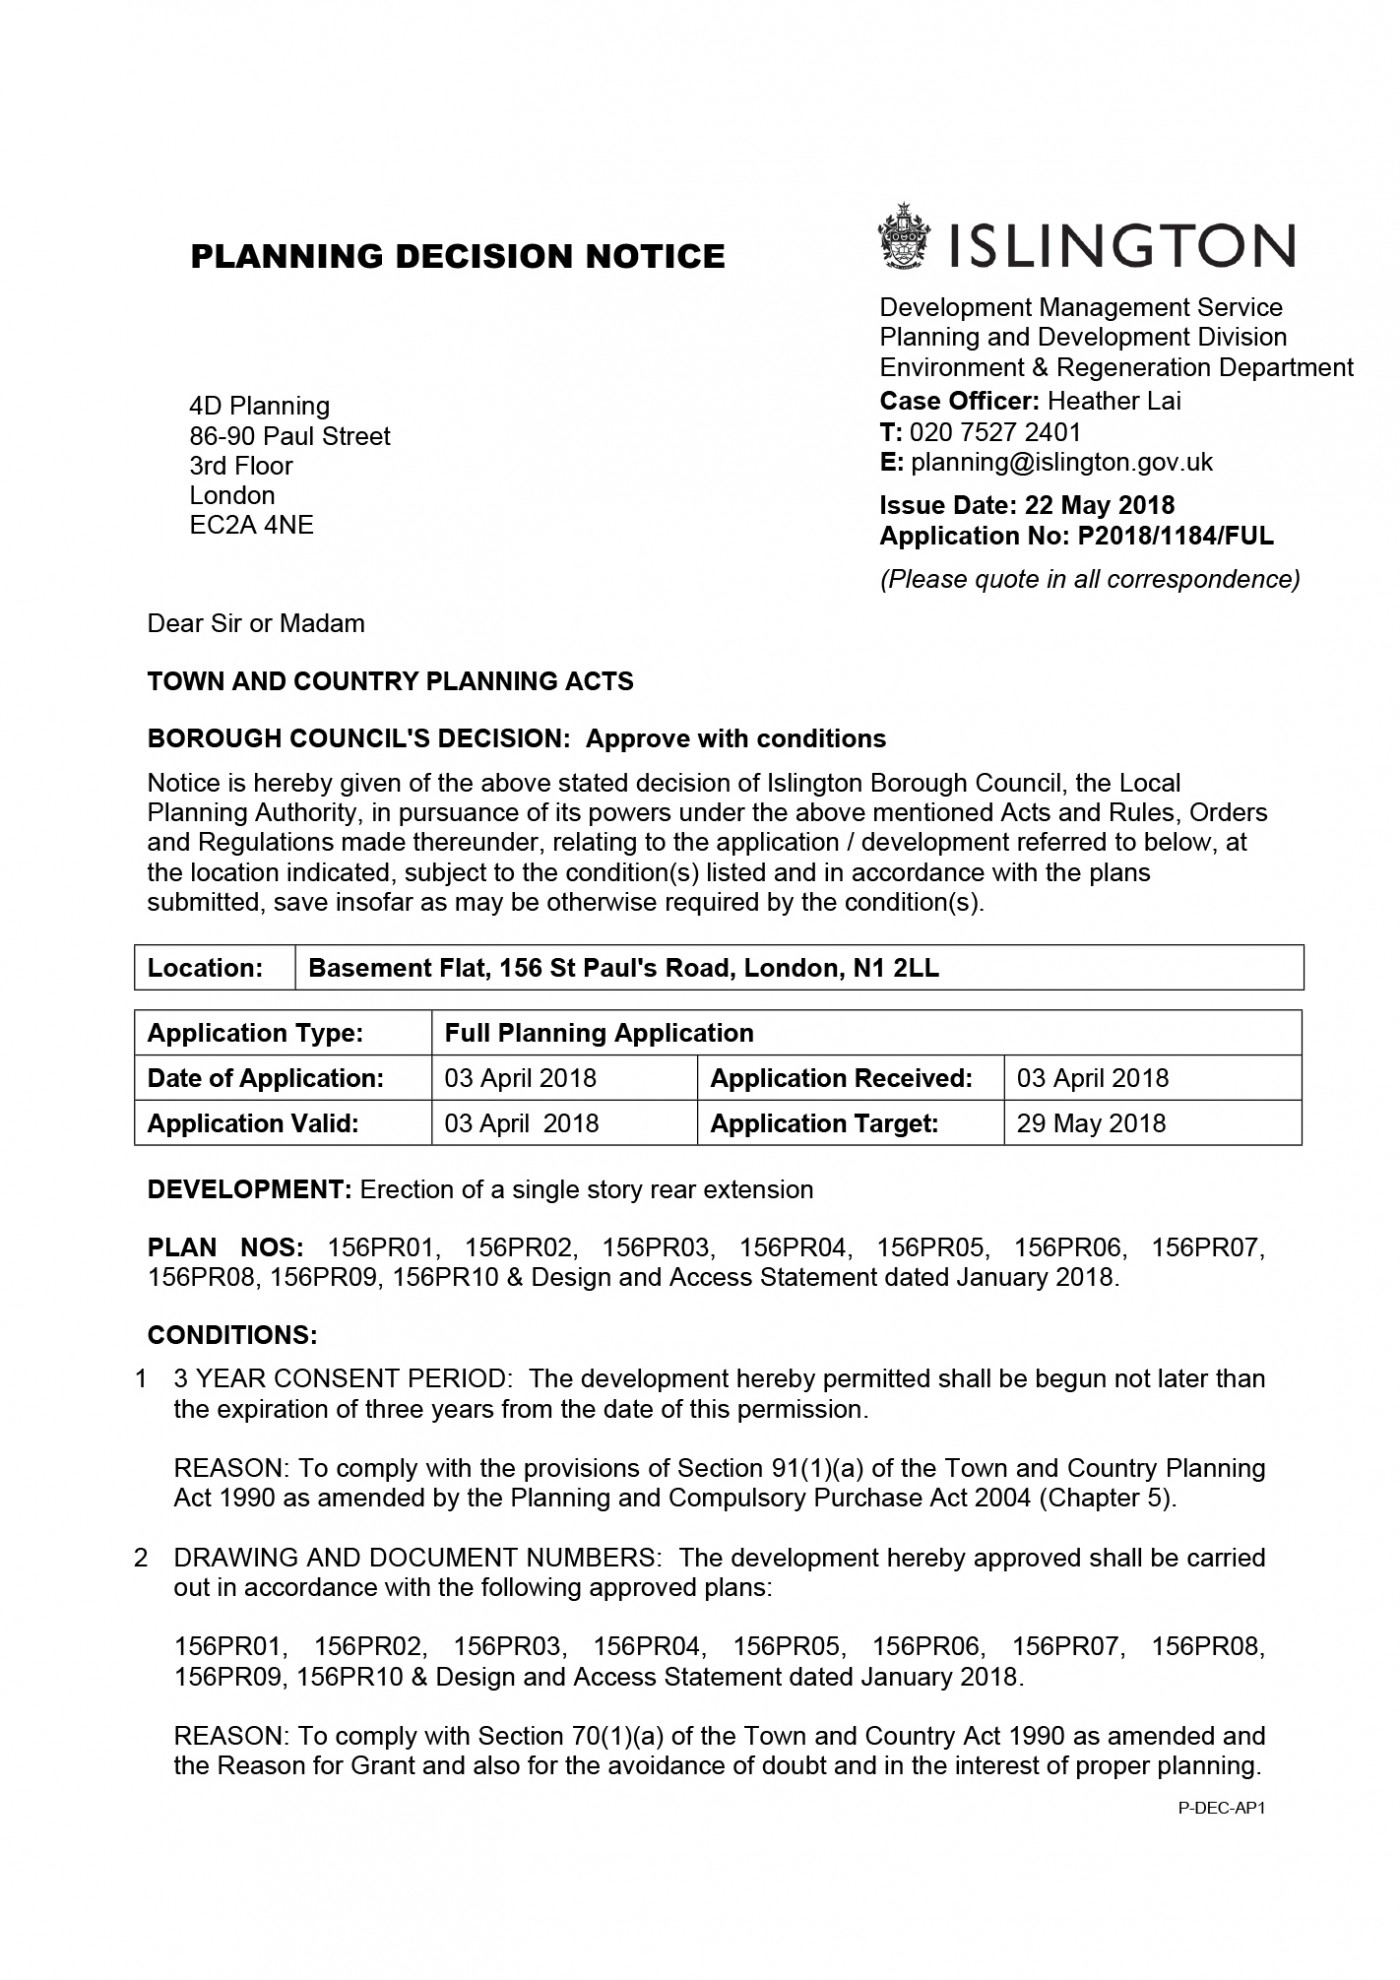 Islington Council Decision Notice - Planning Permission Granted